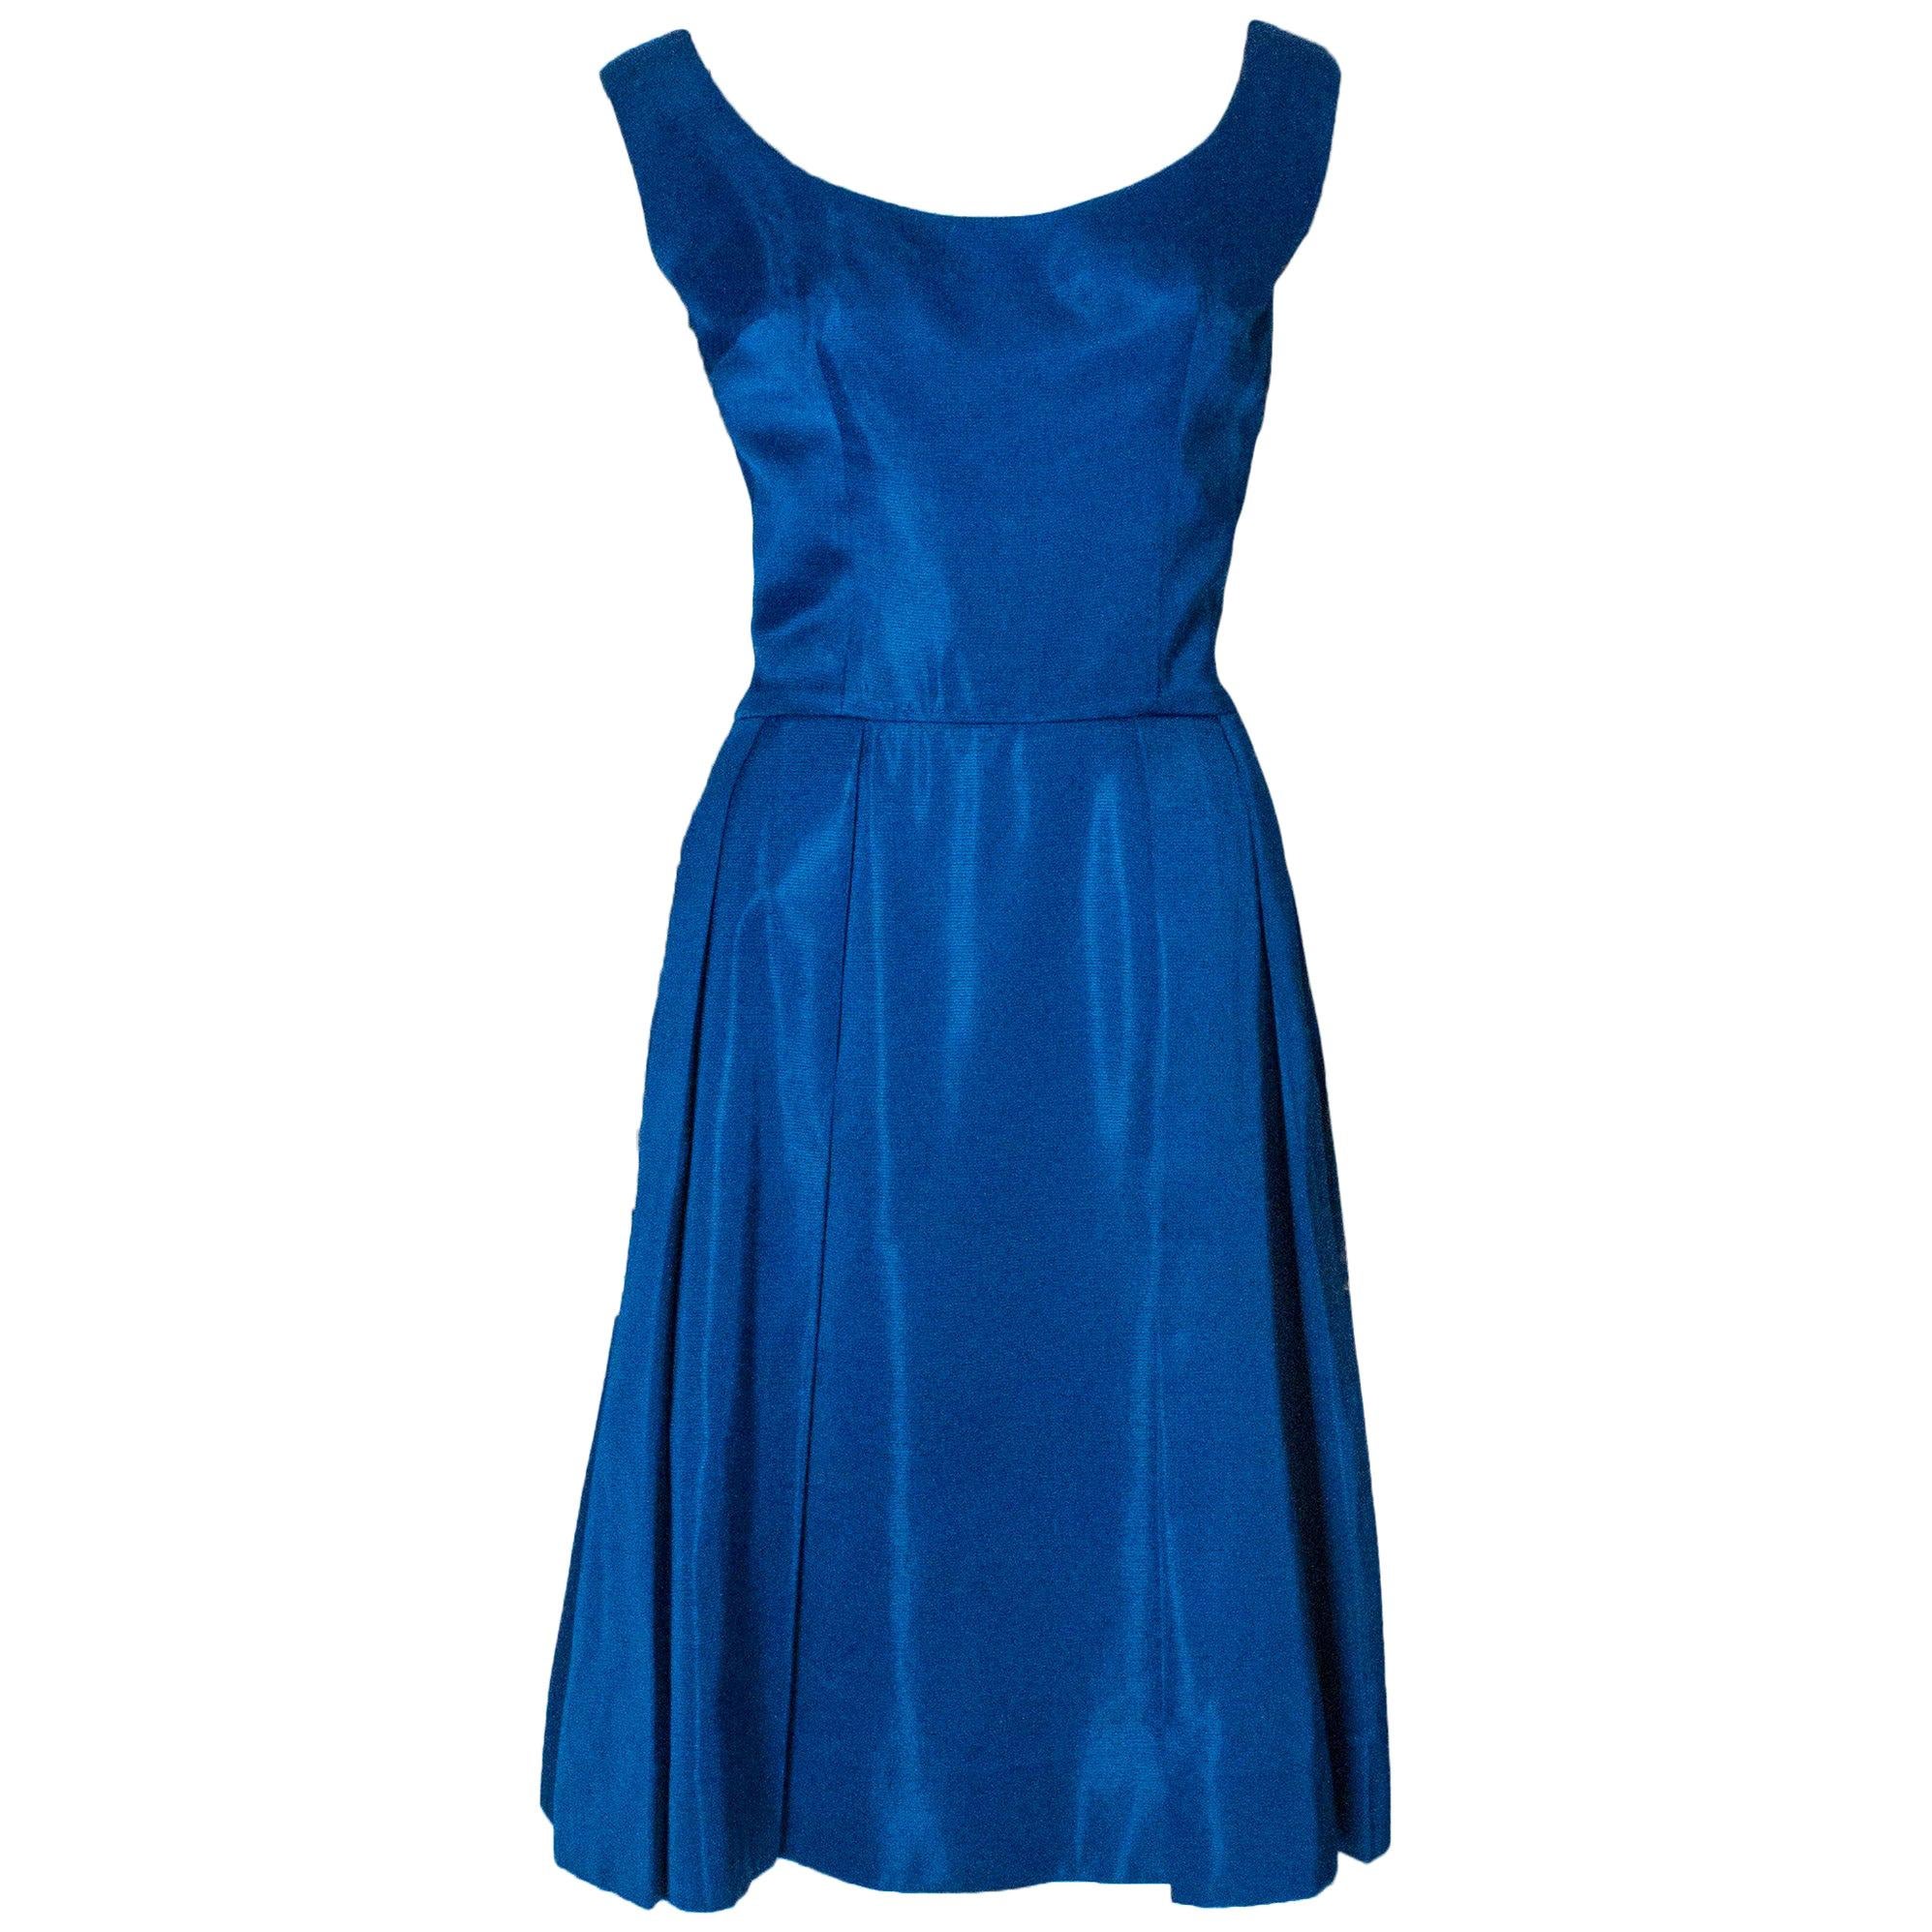 Vintage 1950s Electric Blue Cocktail Dress